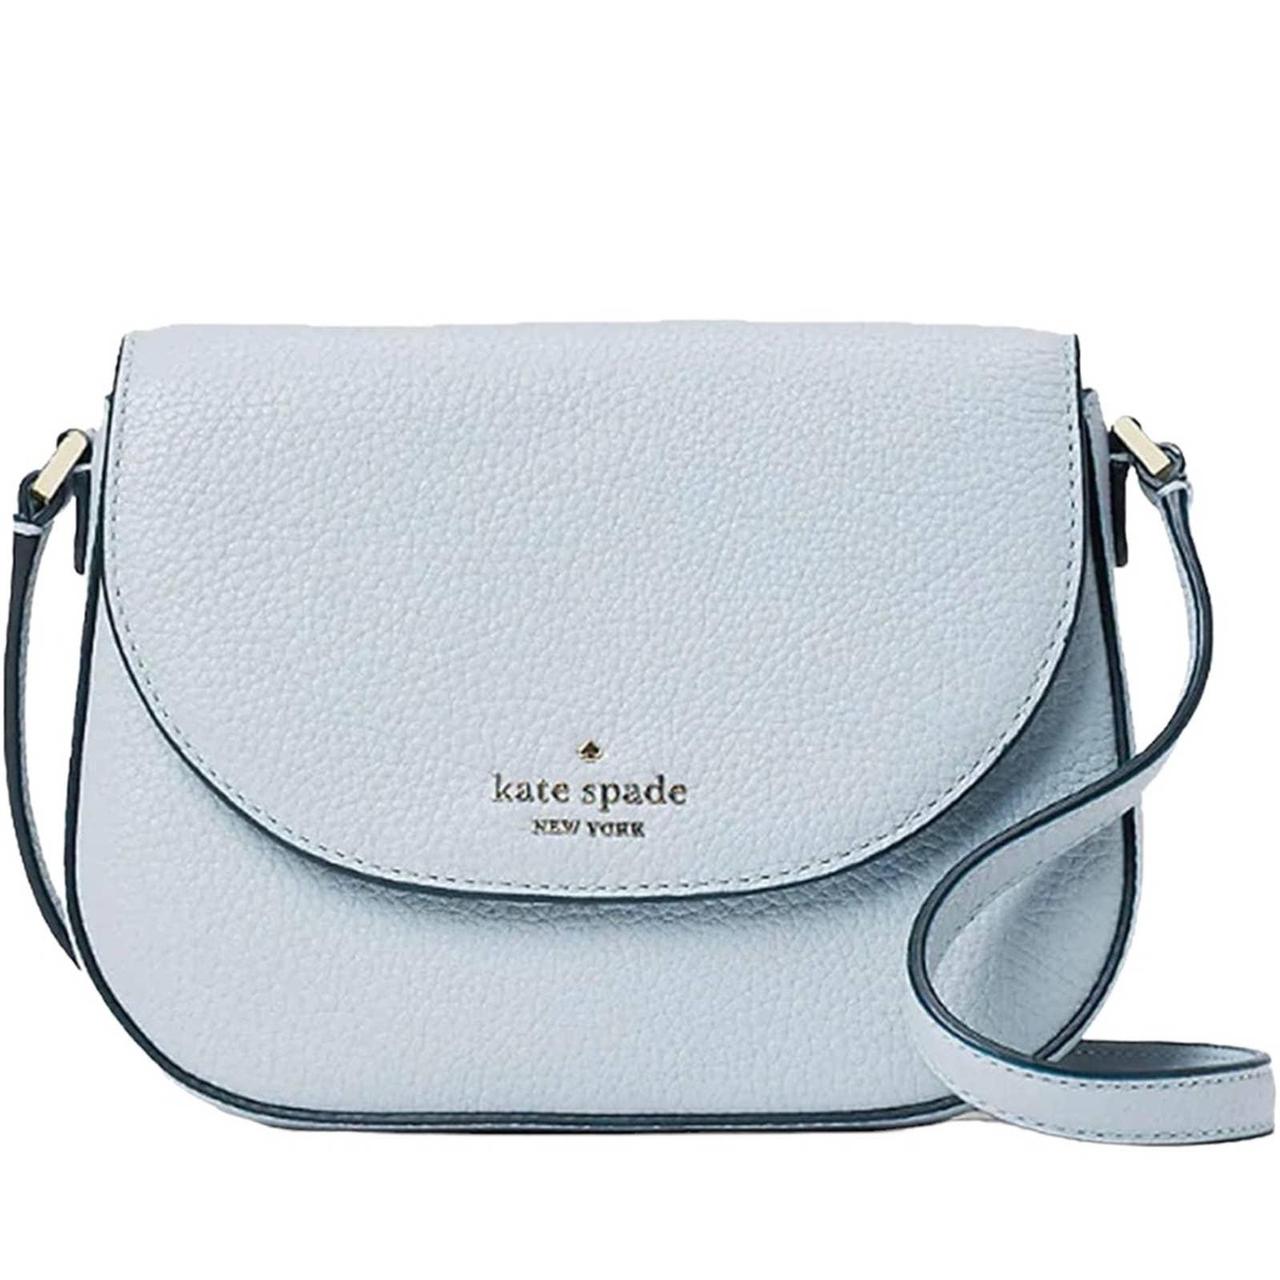 Kate Spade New York Leila Medium Flap Shoulder Bag